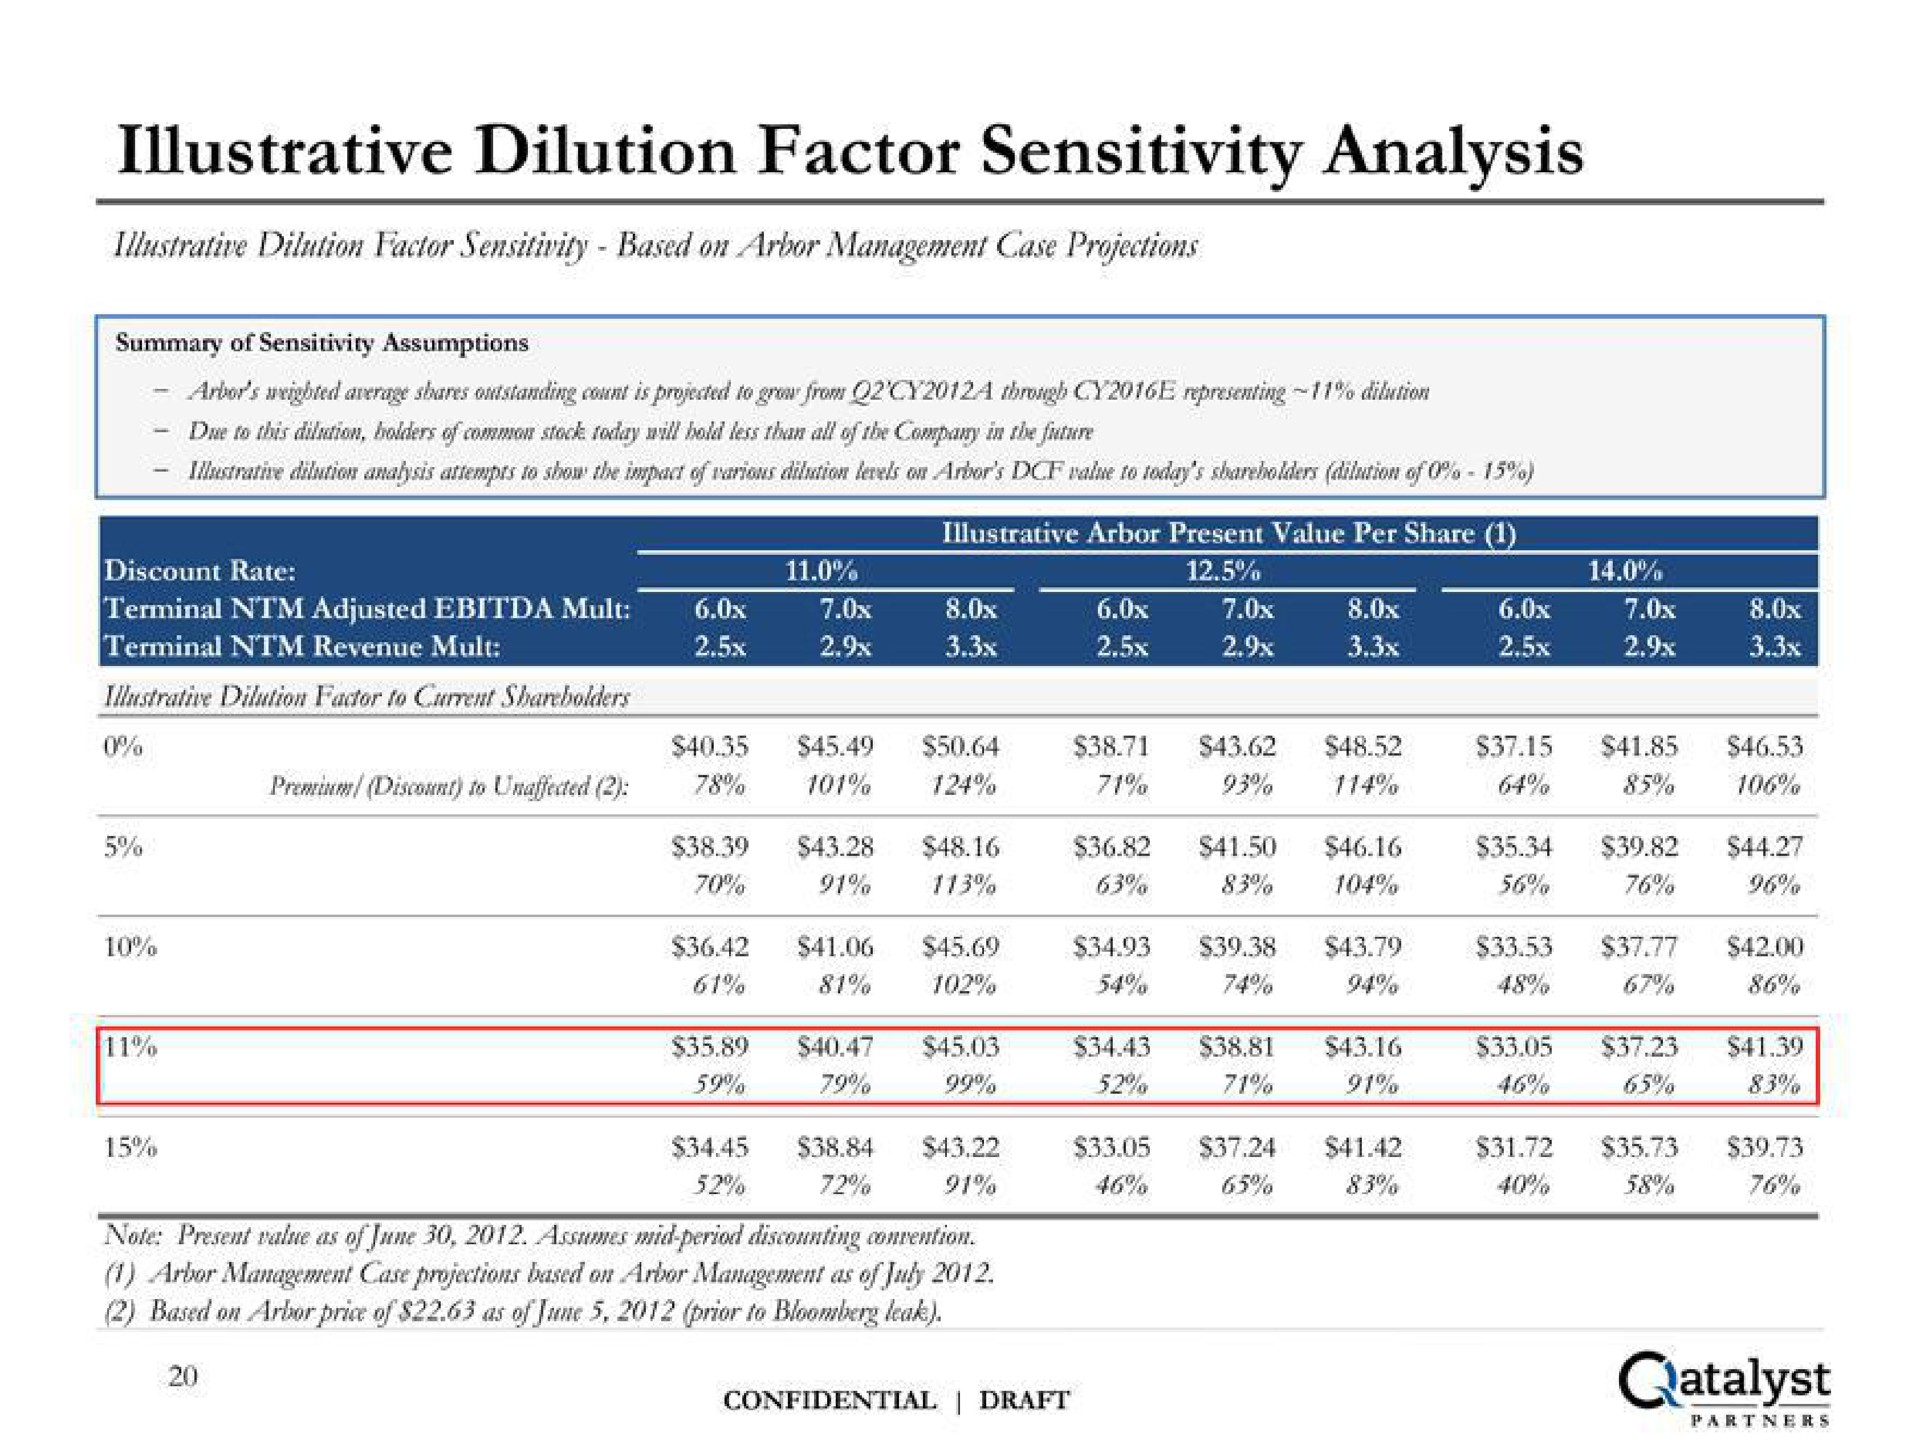 illustrative dilution factor sensitivity analysis | Qatalyst Partners